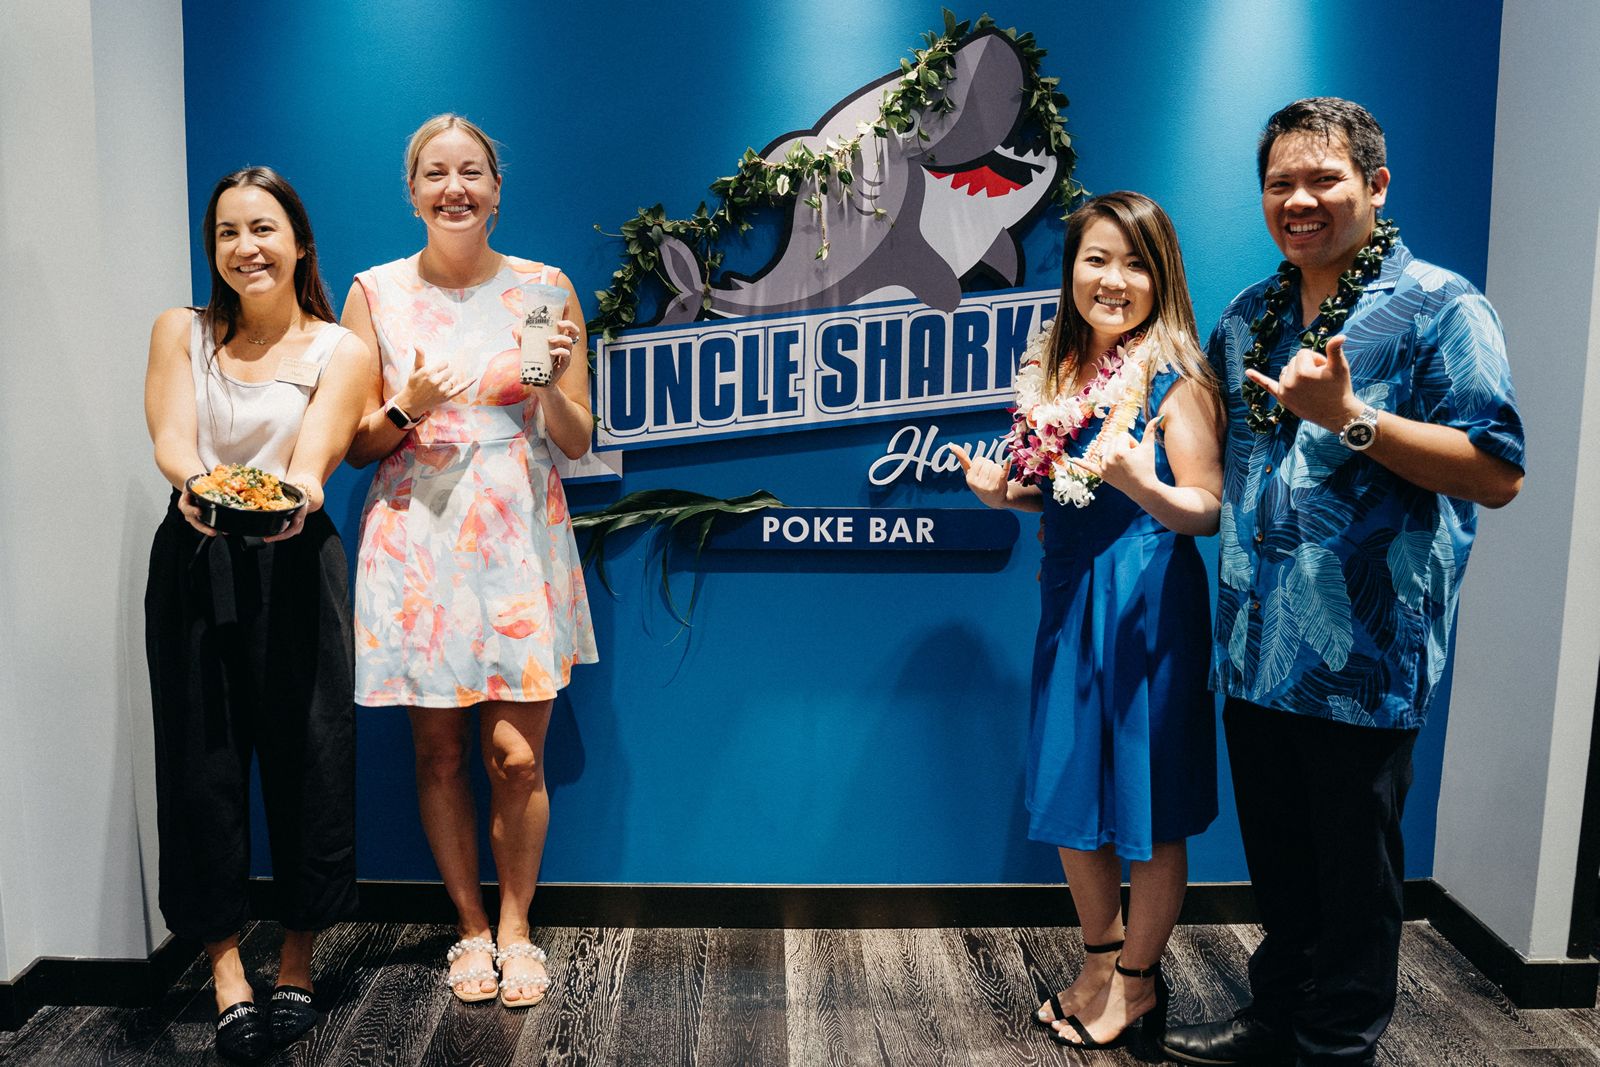 The Essence of Hawaiian Poke Spurred on by Local Hawaiian Entrepreneur in Uncle Sharkii Poke Bar